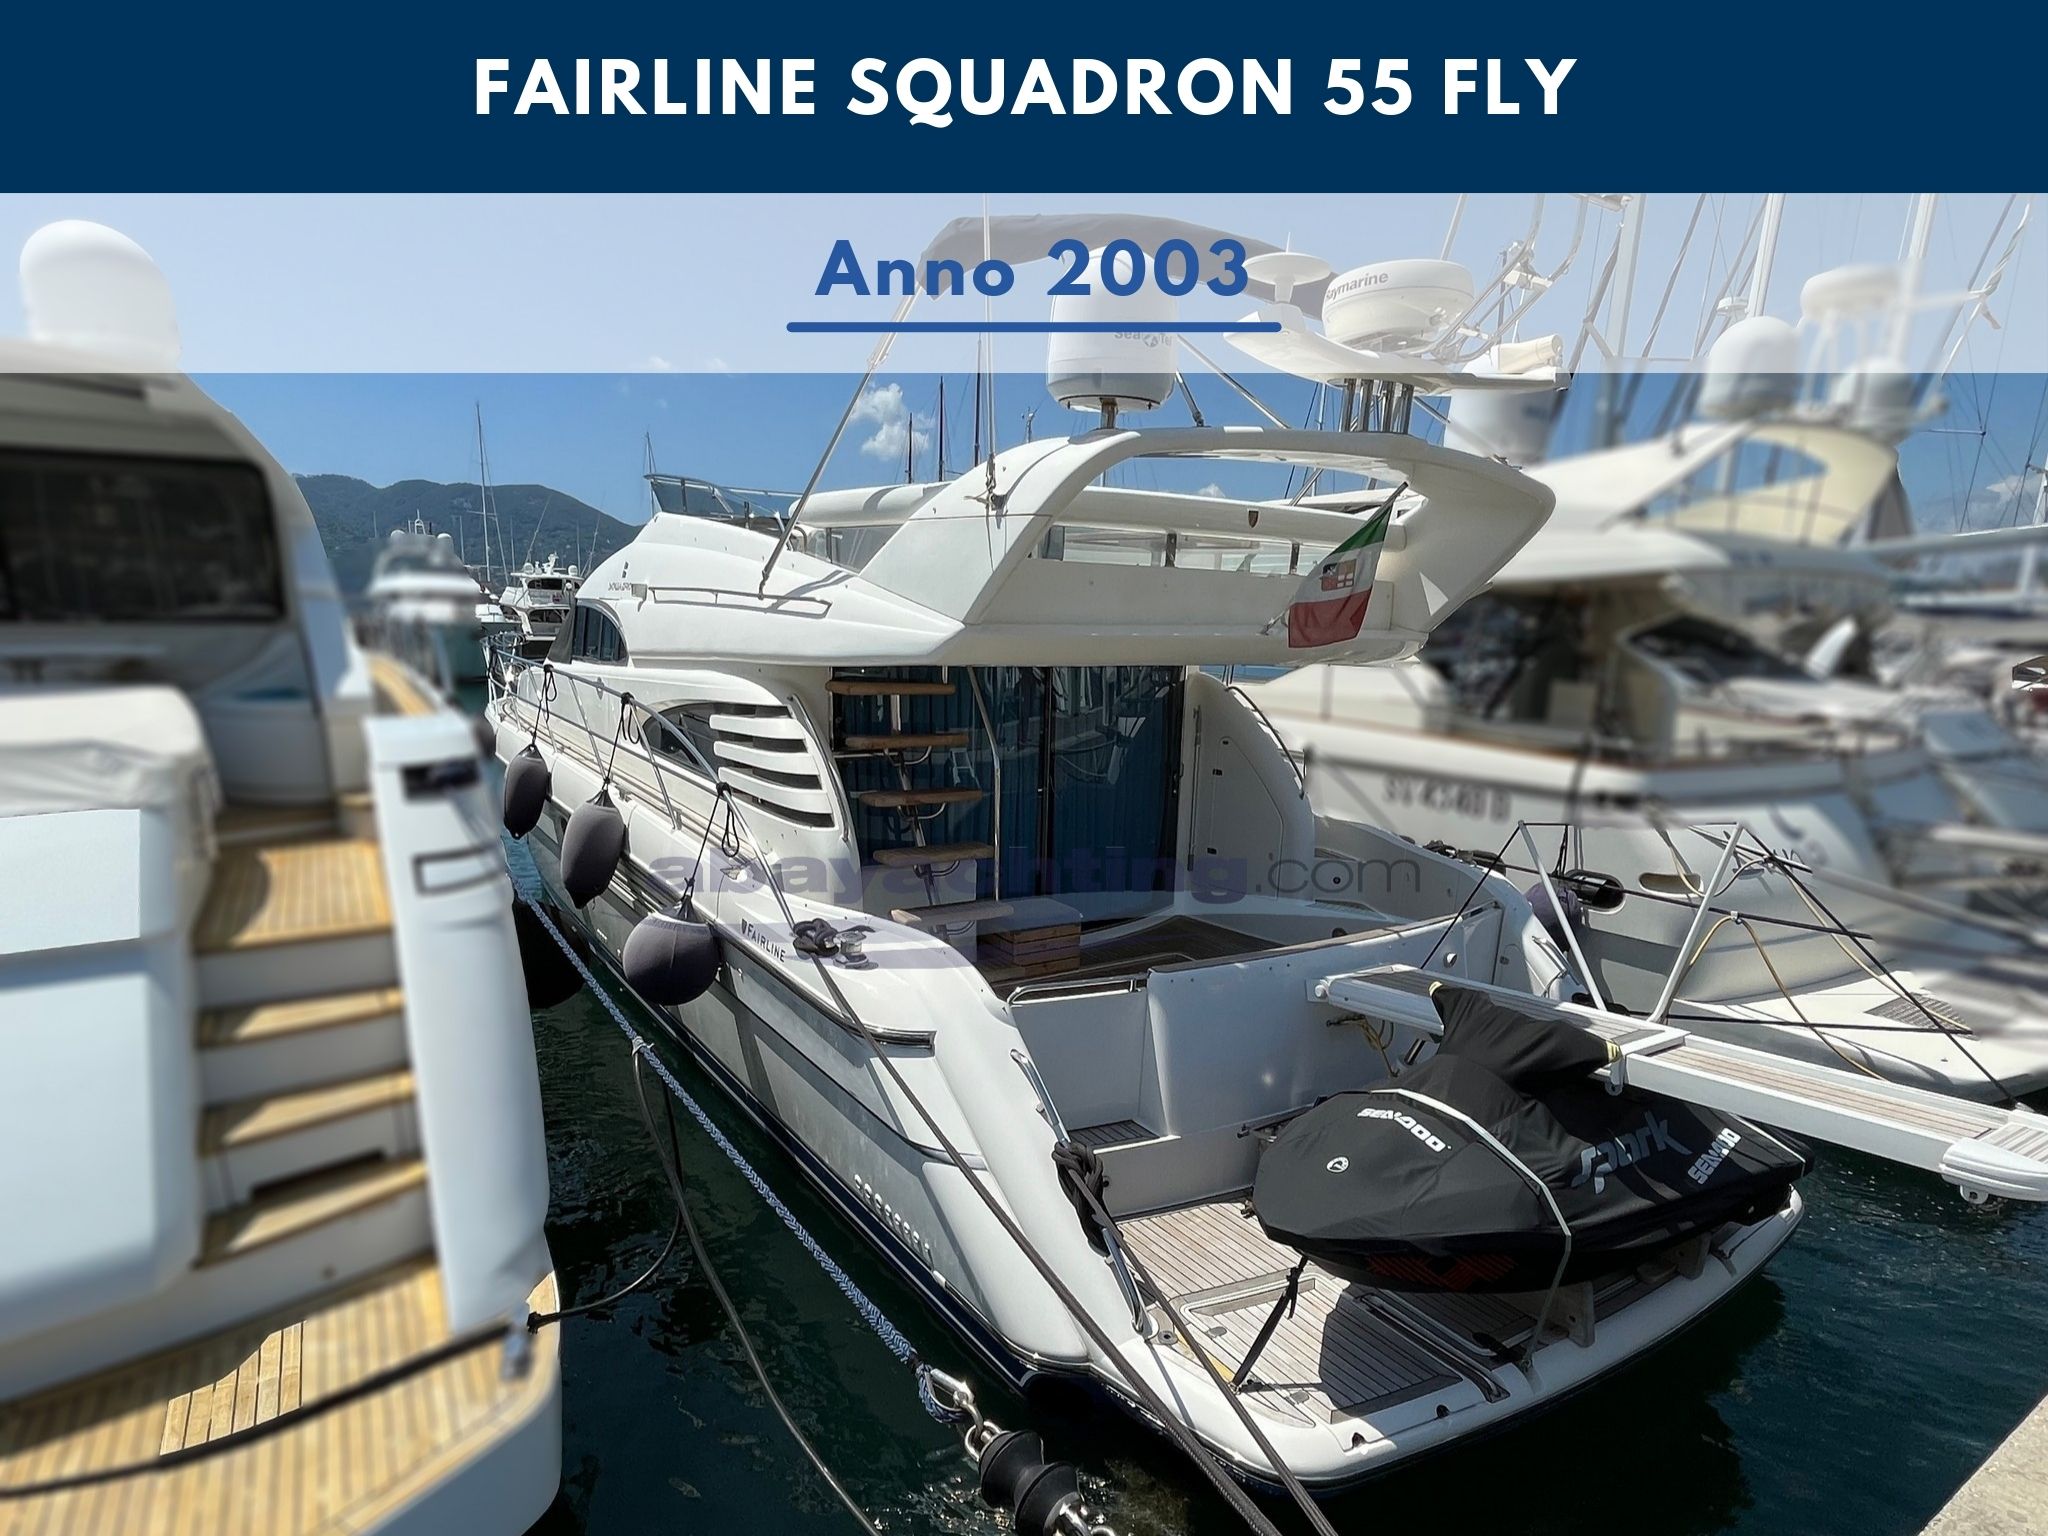 Nuovo Arrivo: Fairline Squadron 55 Fly